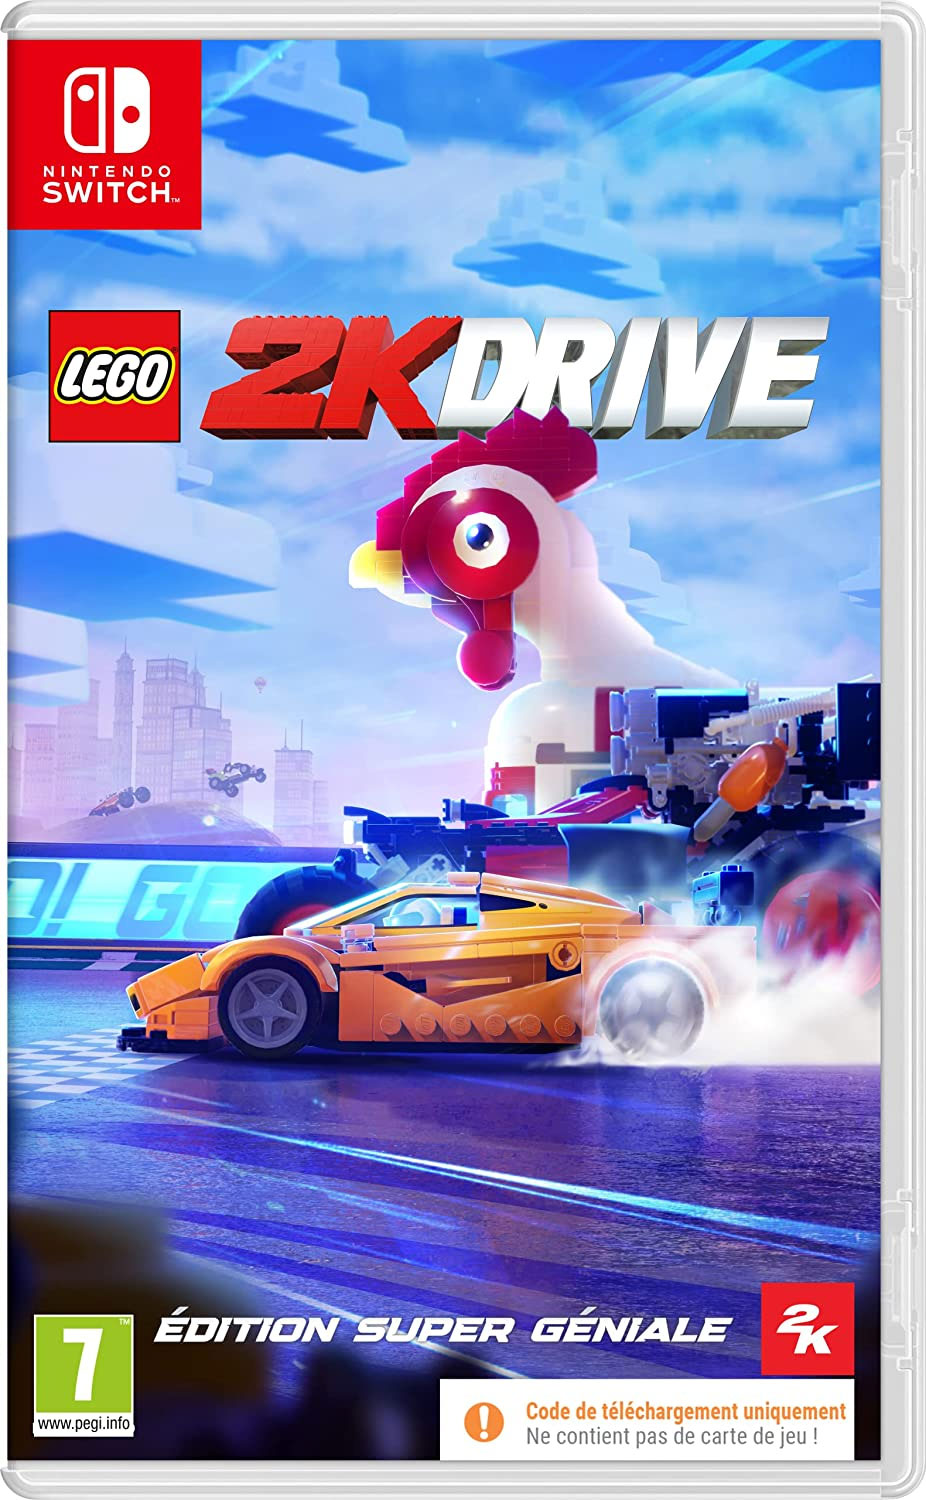 LEGO Jeux vidéo SWITCH-L2KD pas cher, LEGO 2K Drive (code en boîte) -  Nintendo Switch